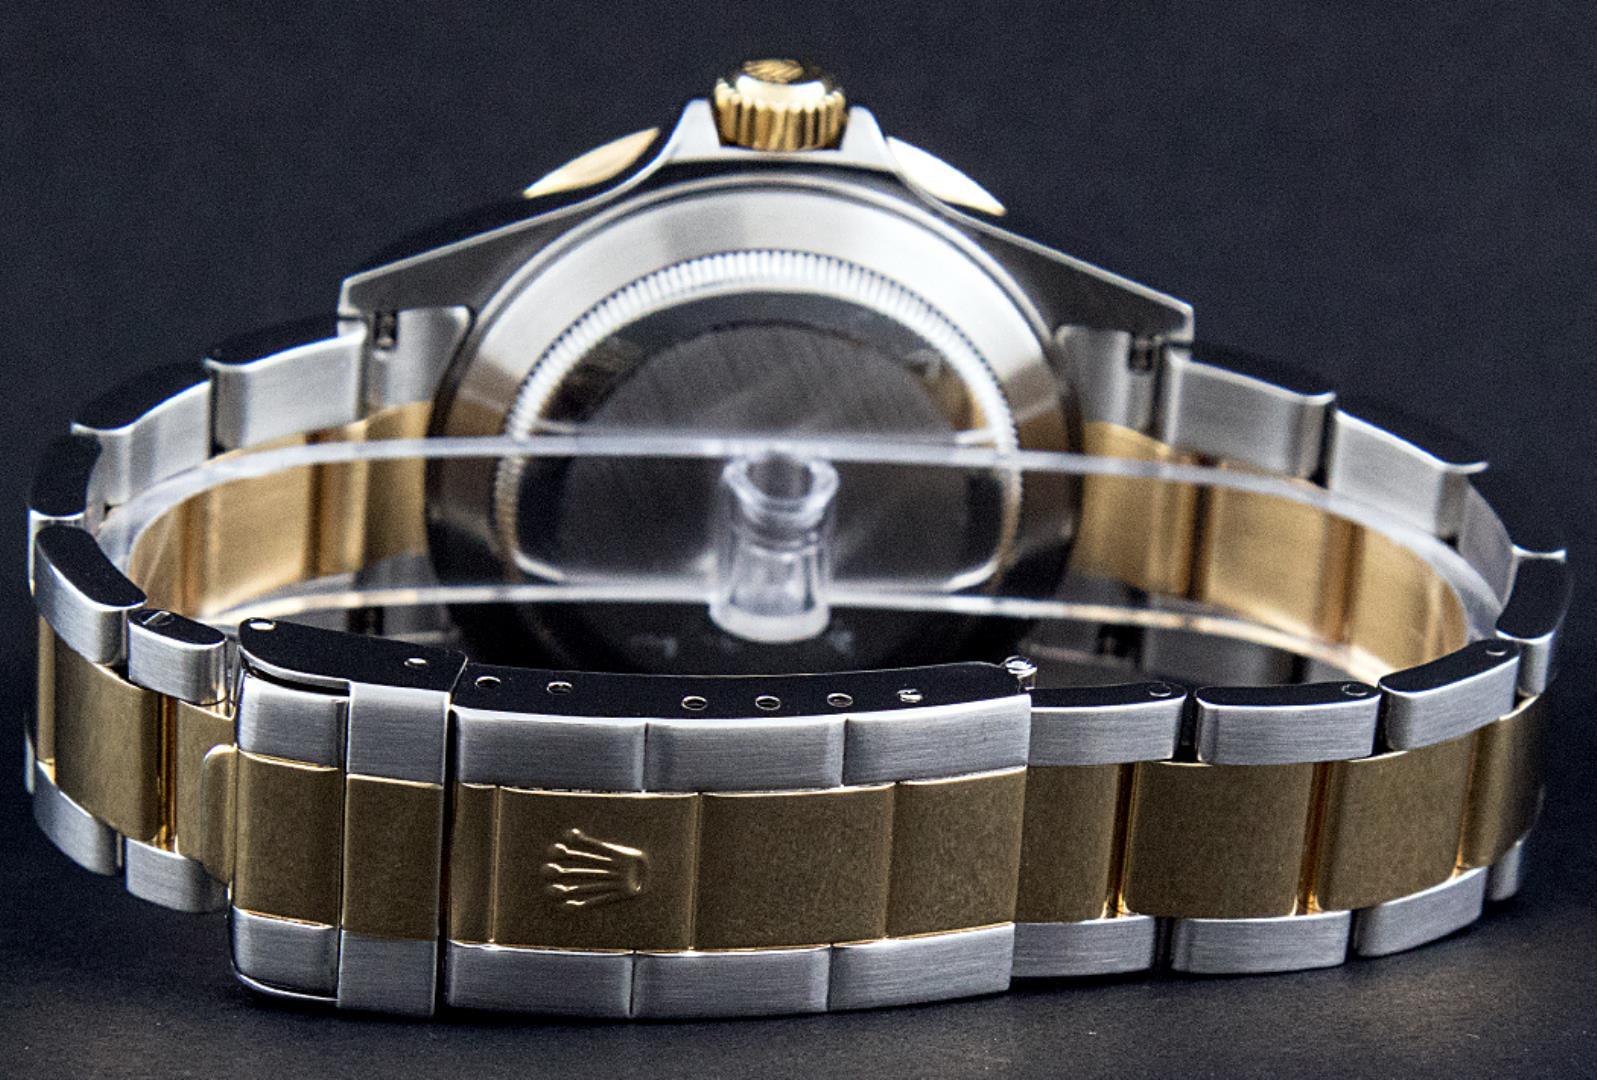 Rolex Mens Two Tone Submariner Wristwatch